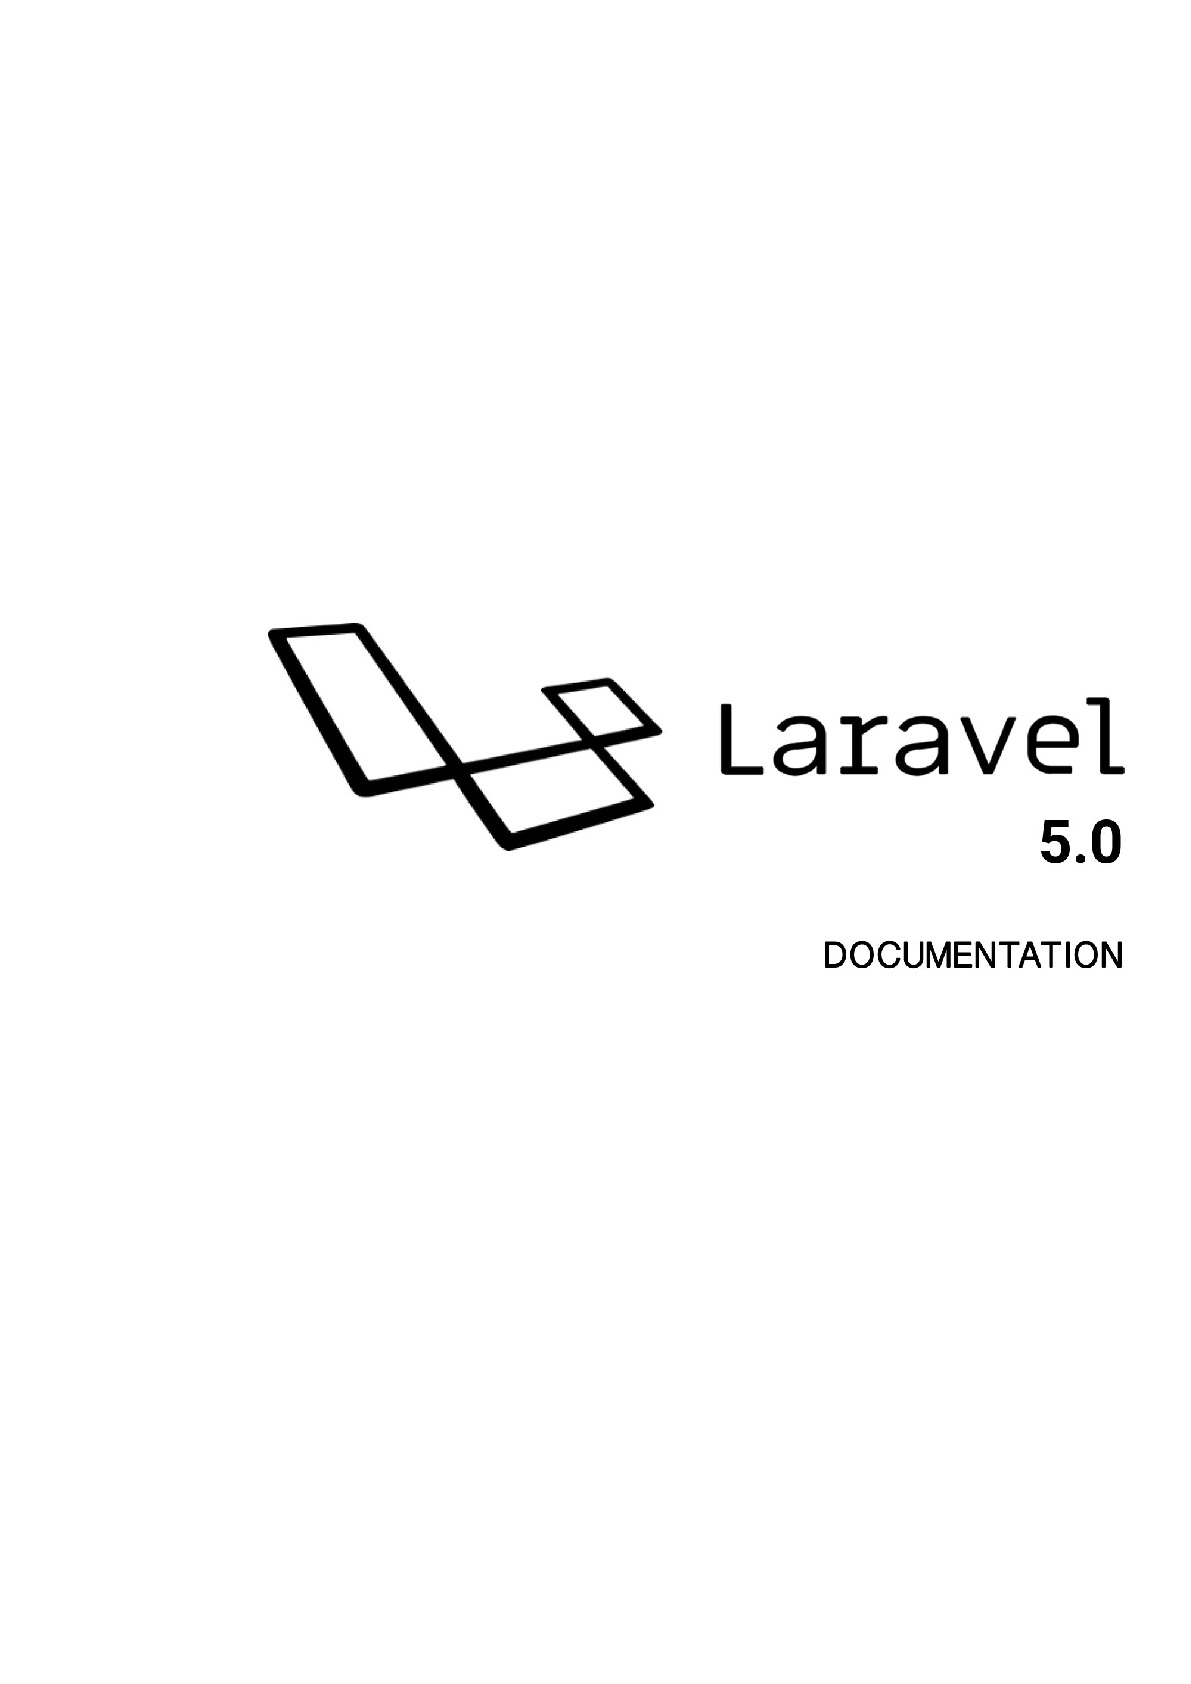 laravel-docs-5.0